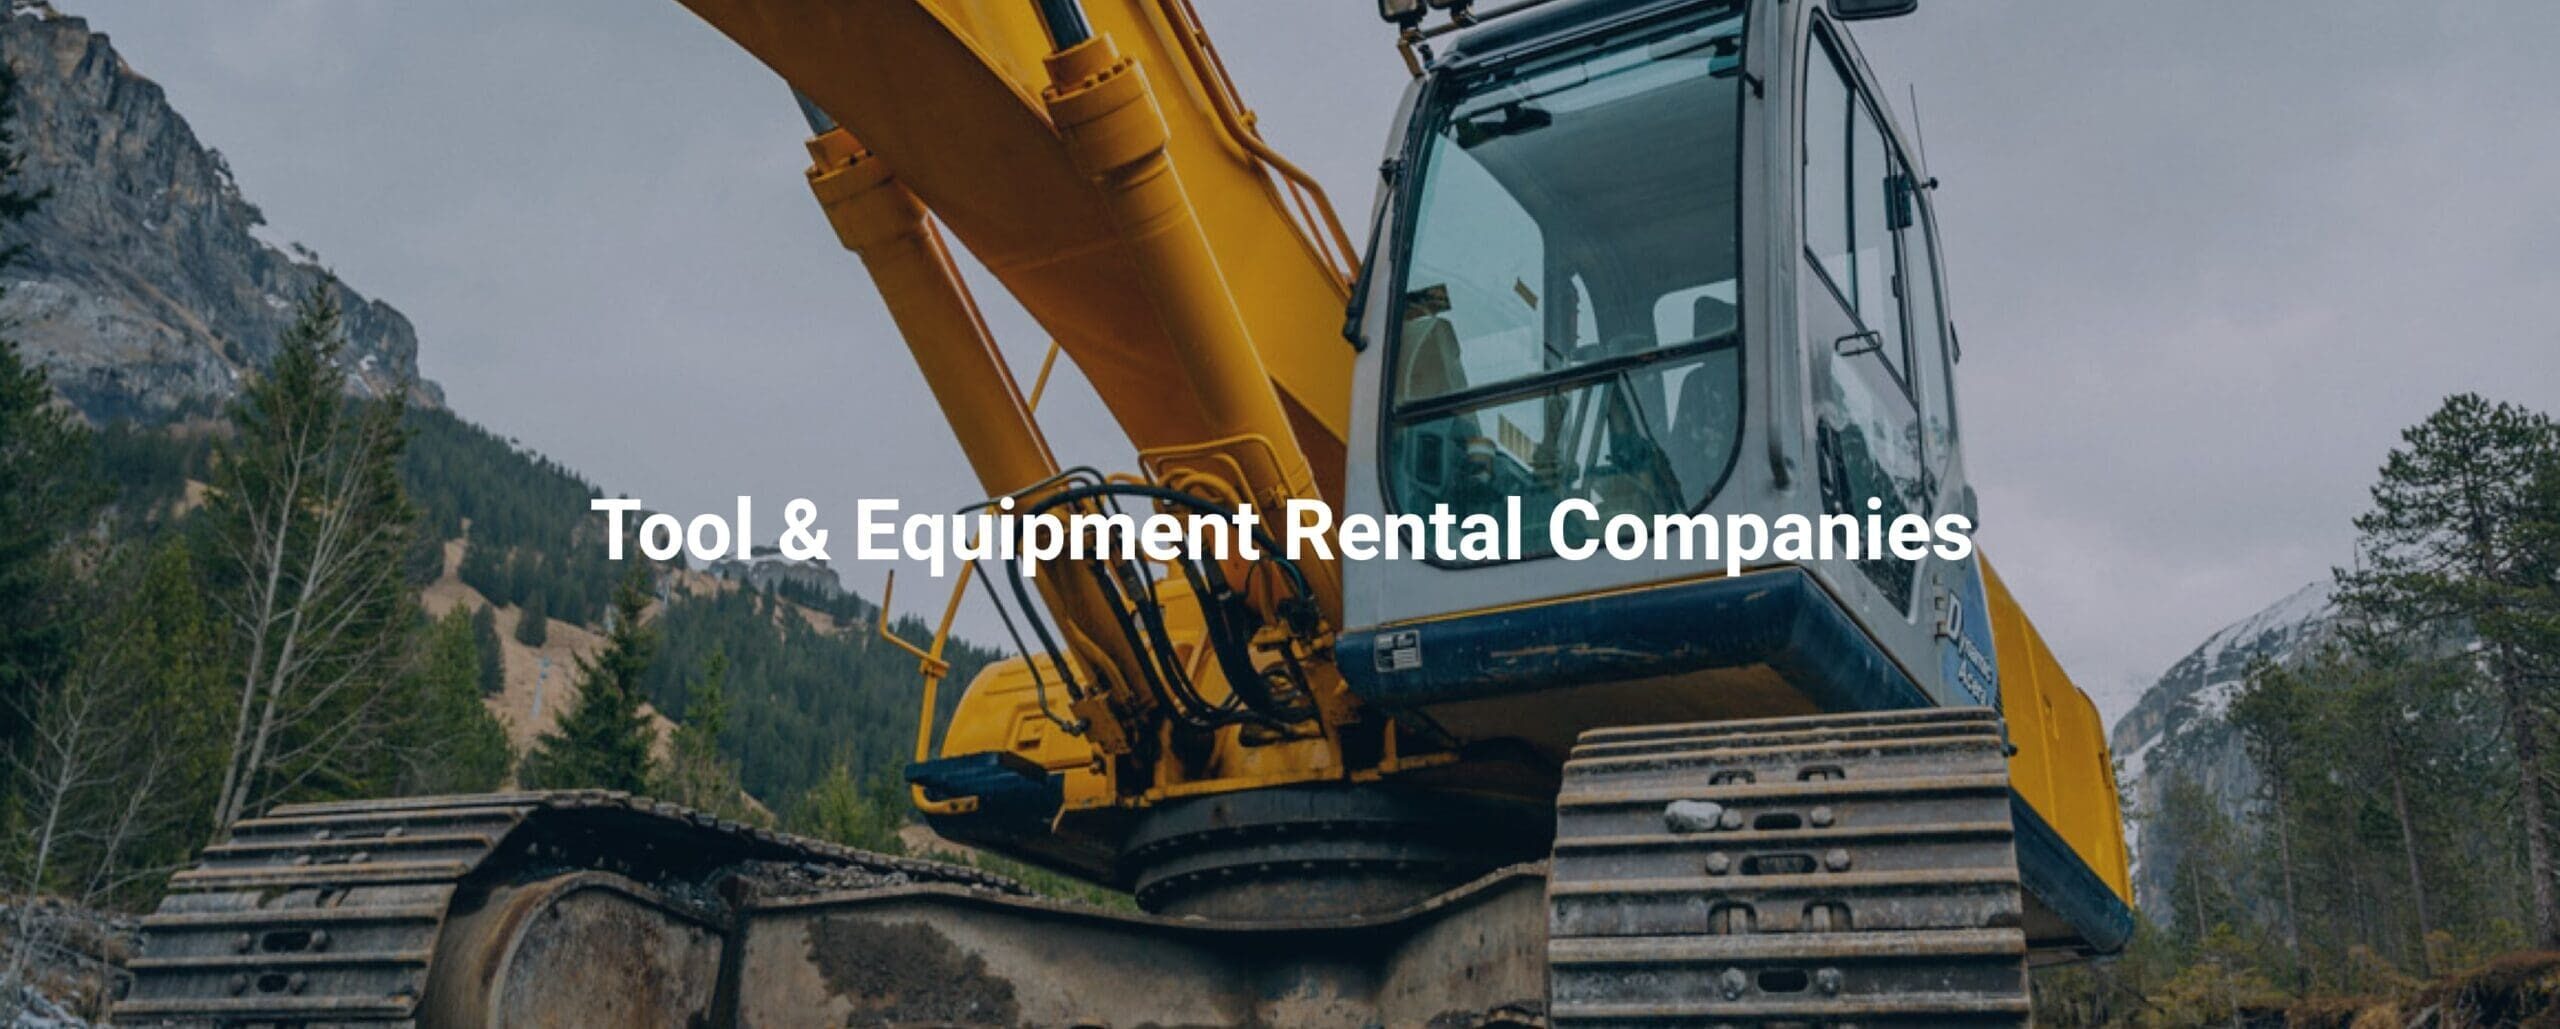 Tool & Equipment Rental Companies